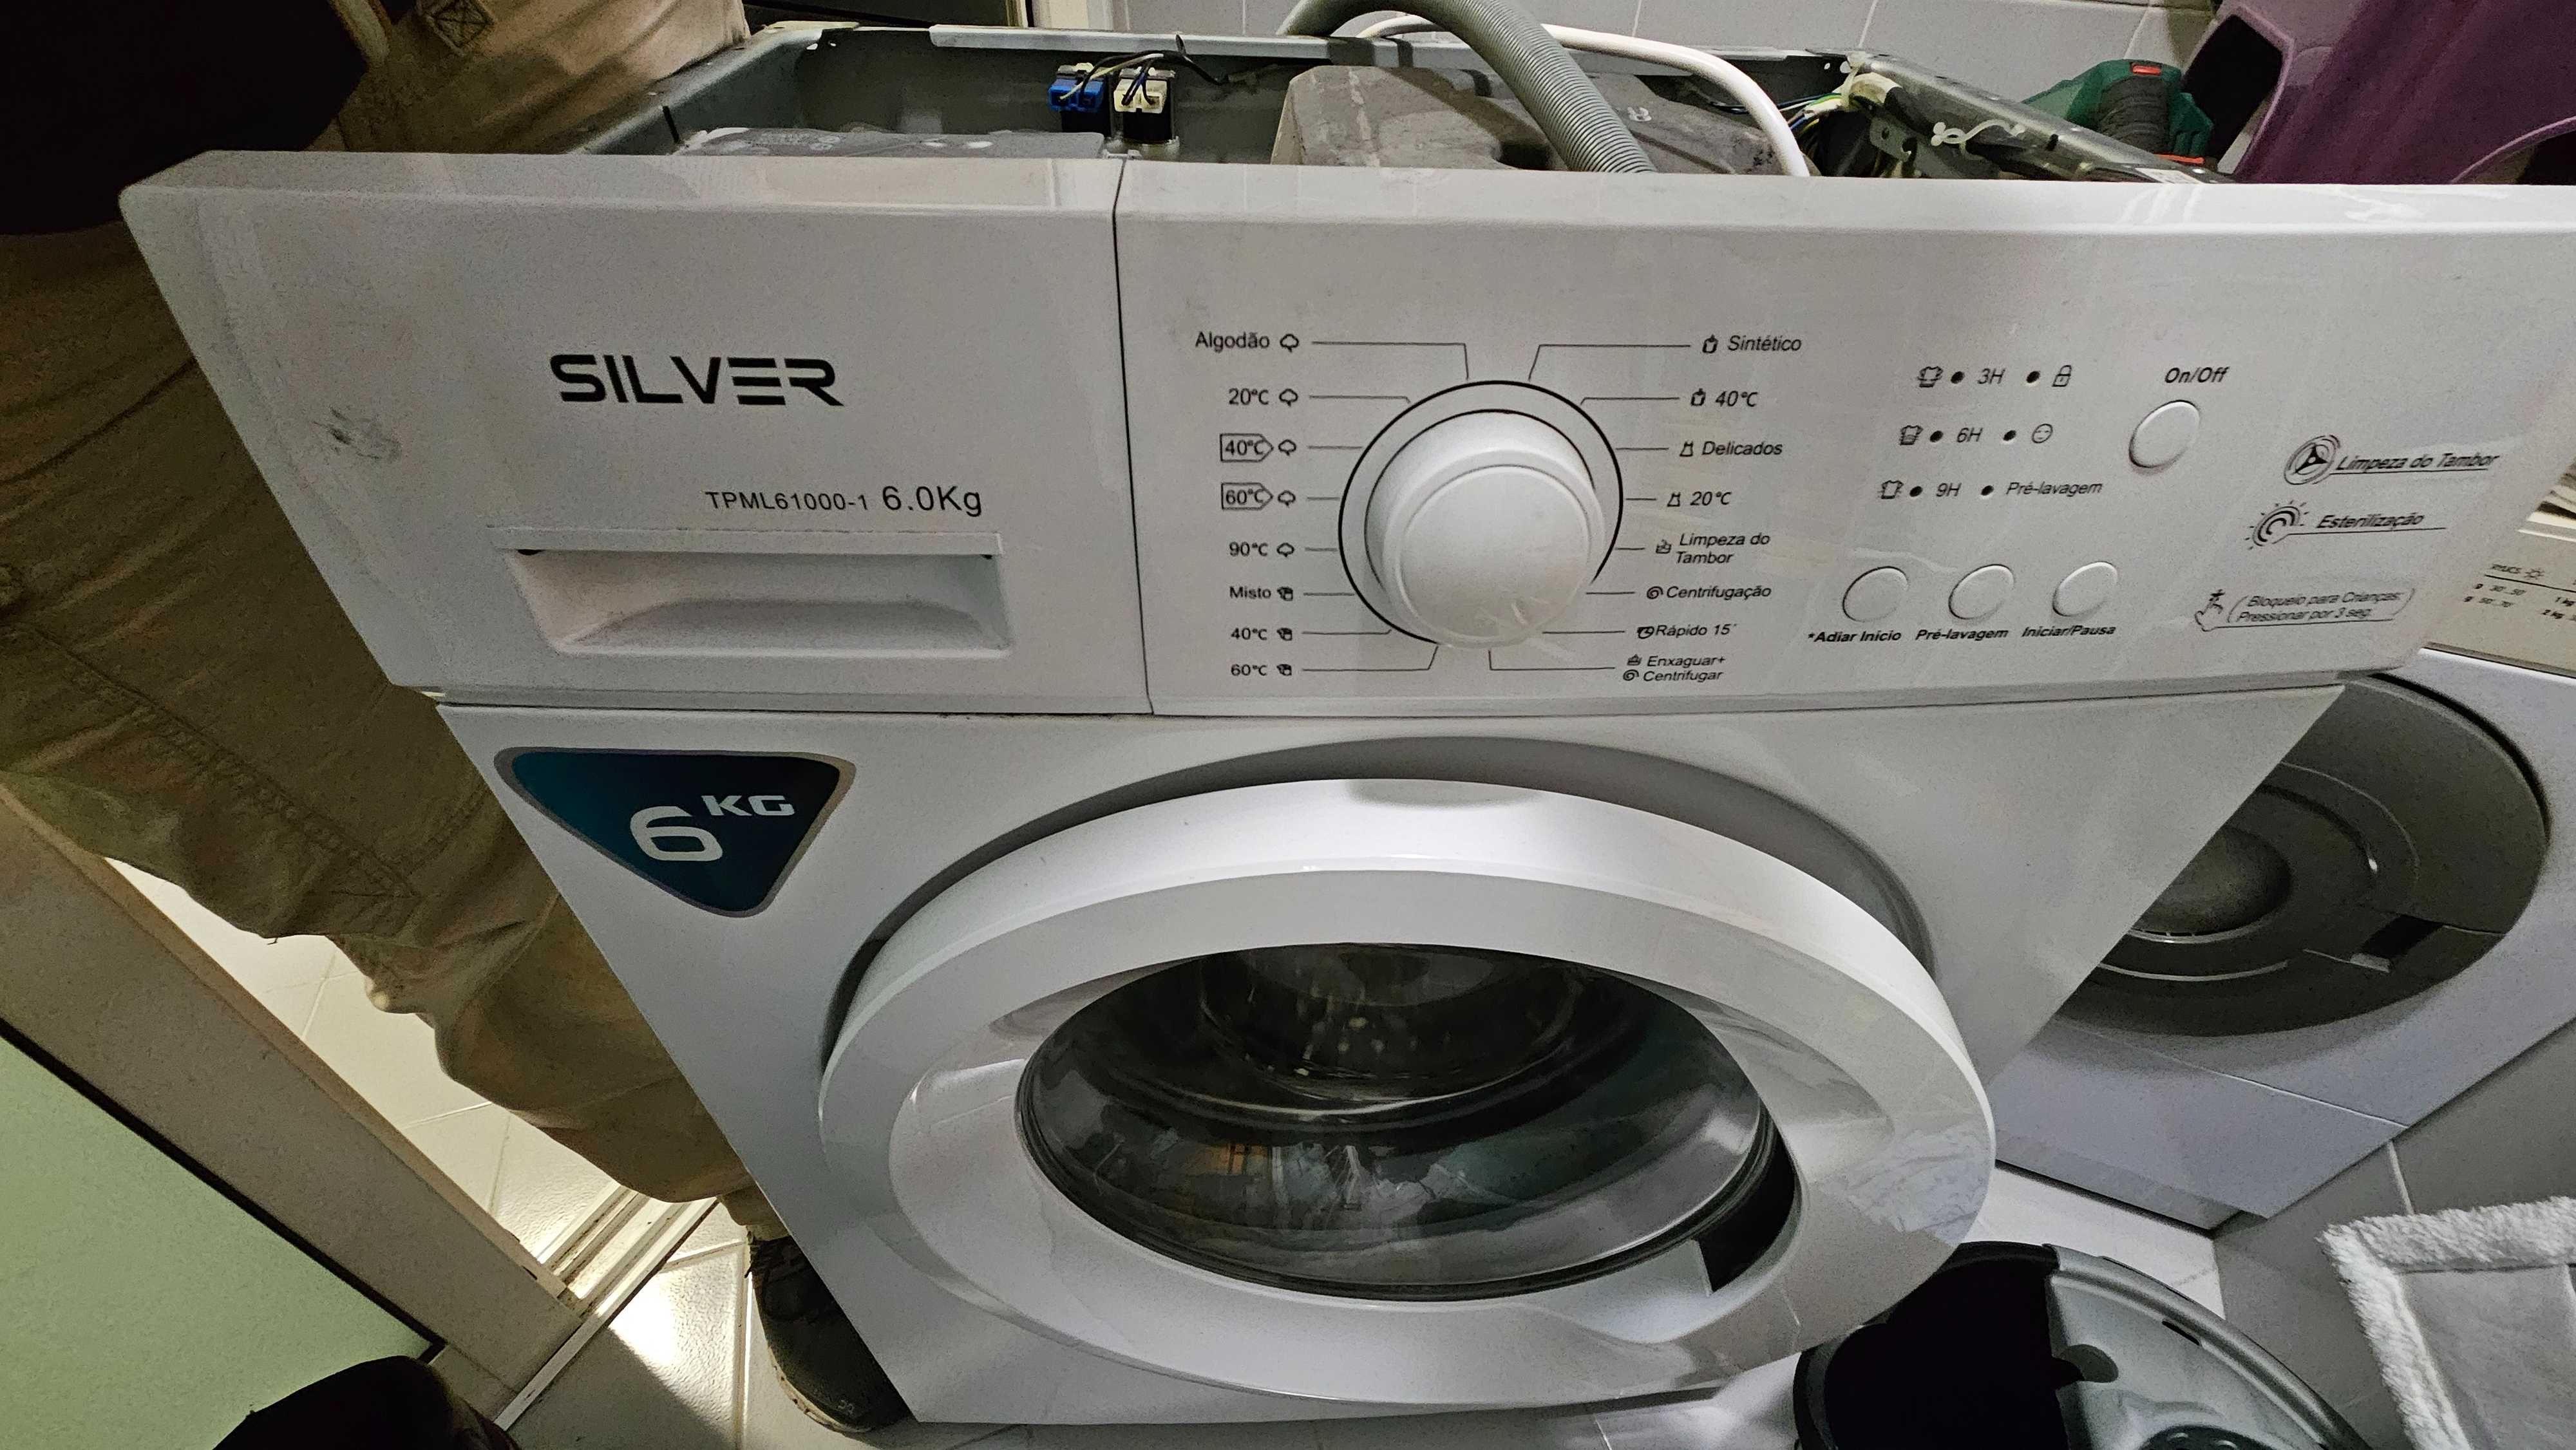 Placa eletrónica para Máquina Lavar Roupa Silver TPML61000-1